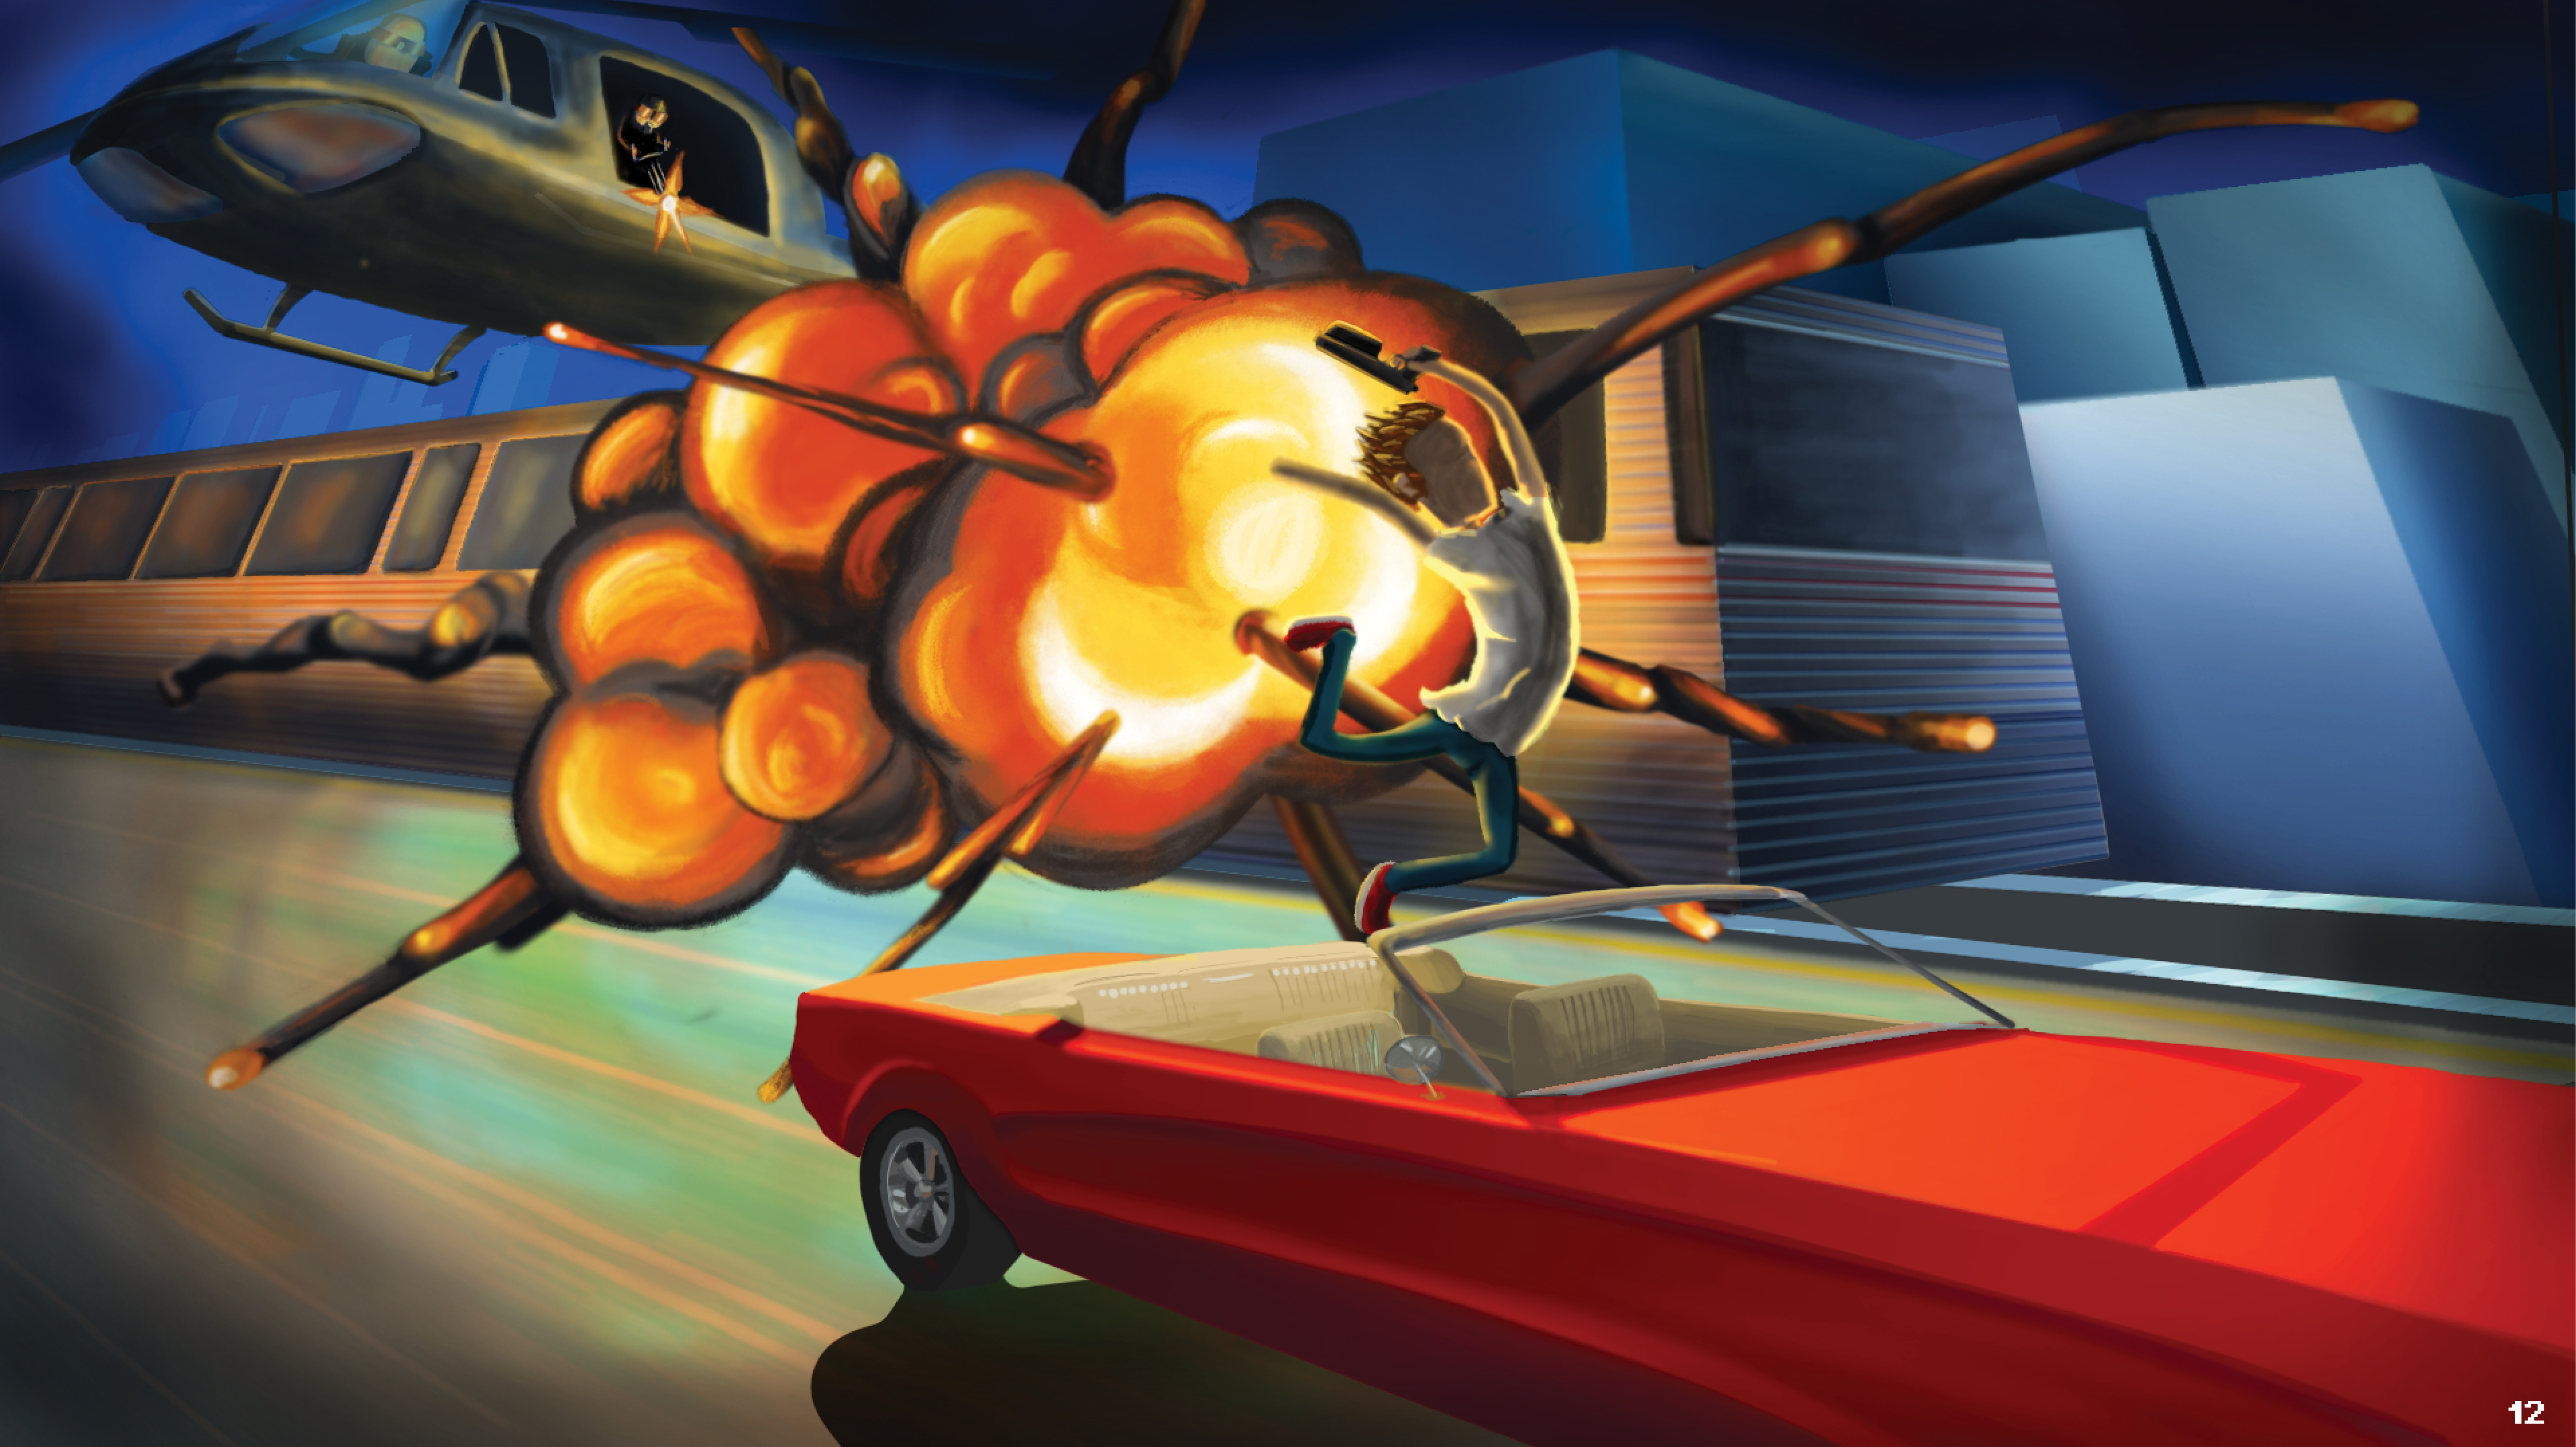 Speed Limit Arcadecraft Artbook screenshot